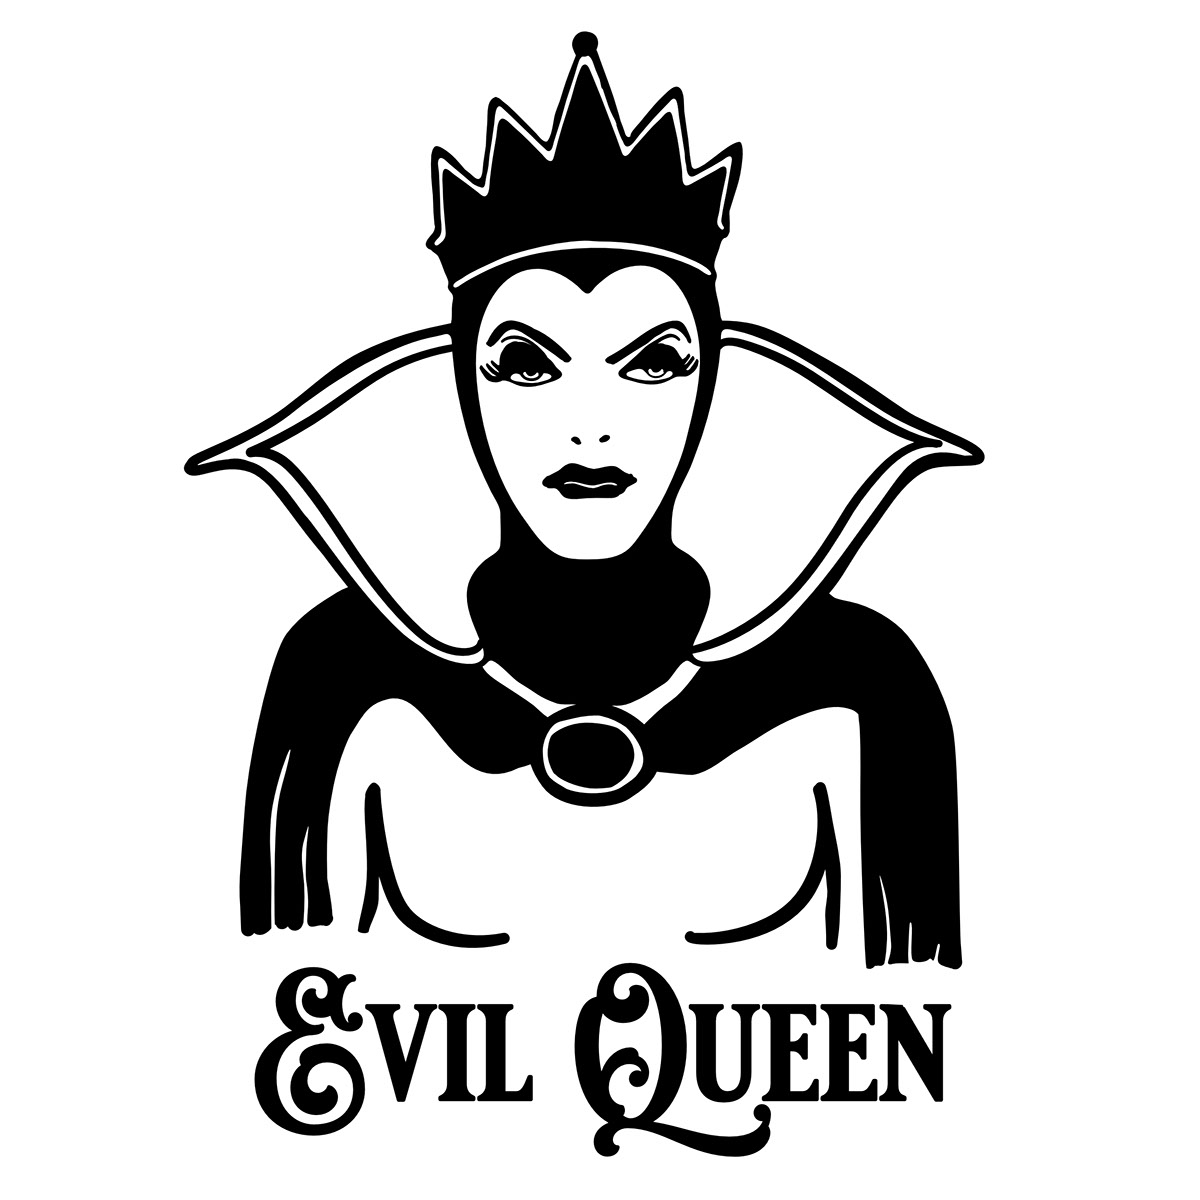 Snow White - Queen Prince Huntsman rendition image